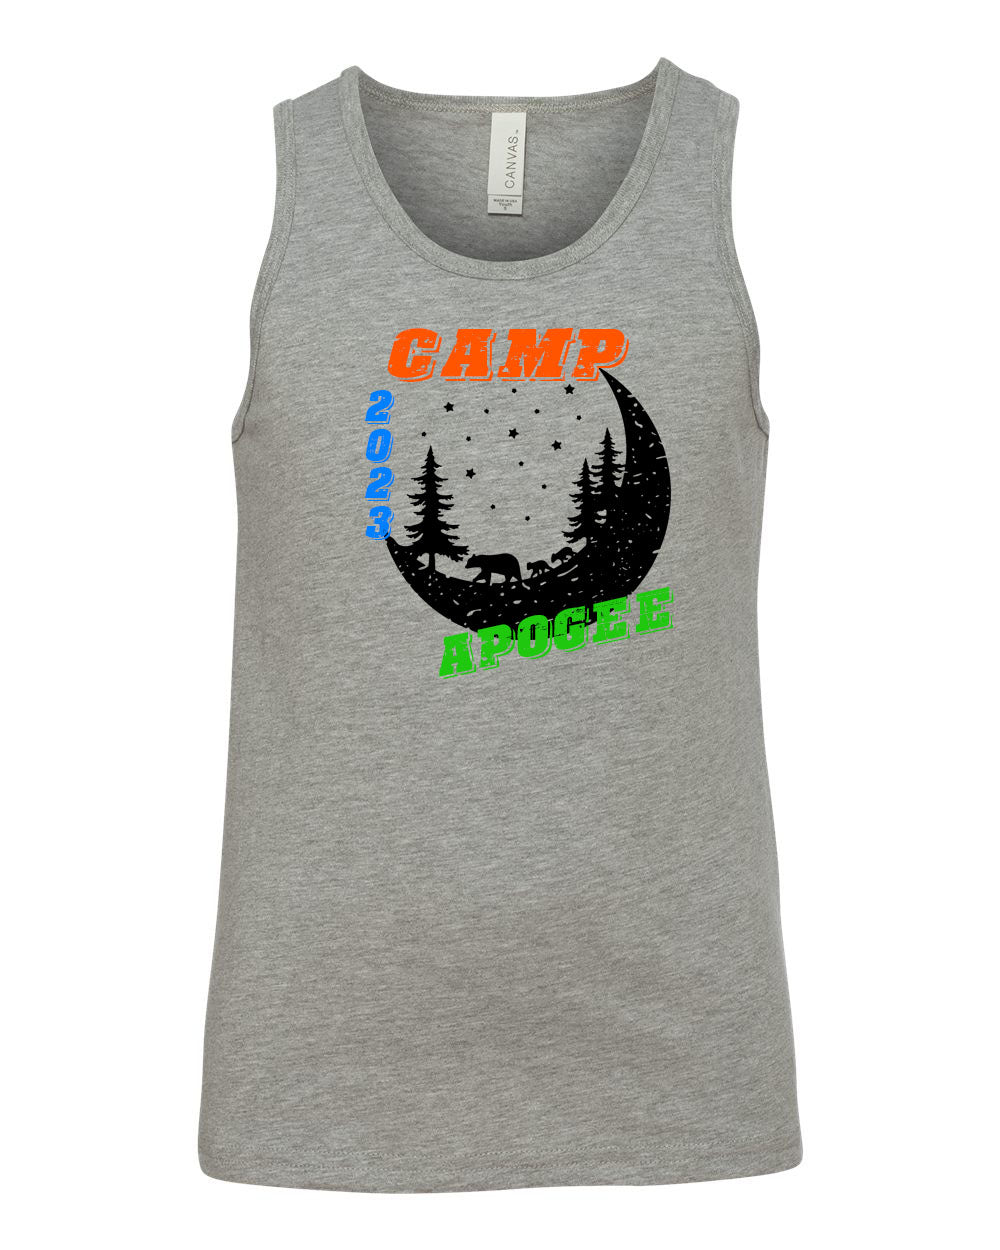 Hilltop Camp design 1 Muscle Tank Top